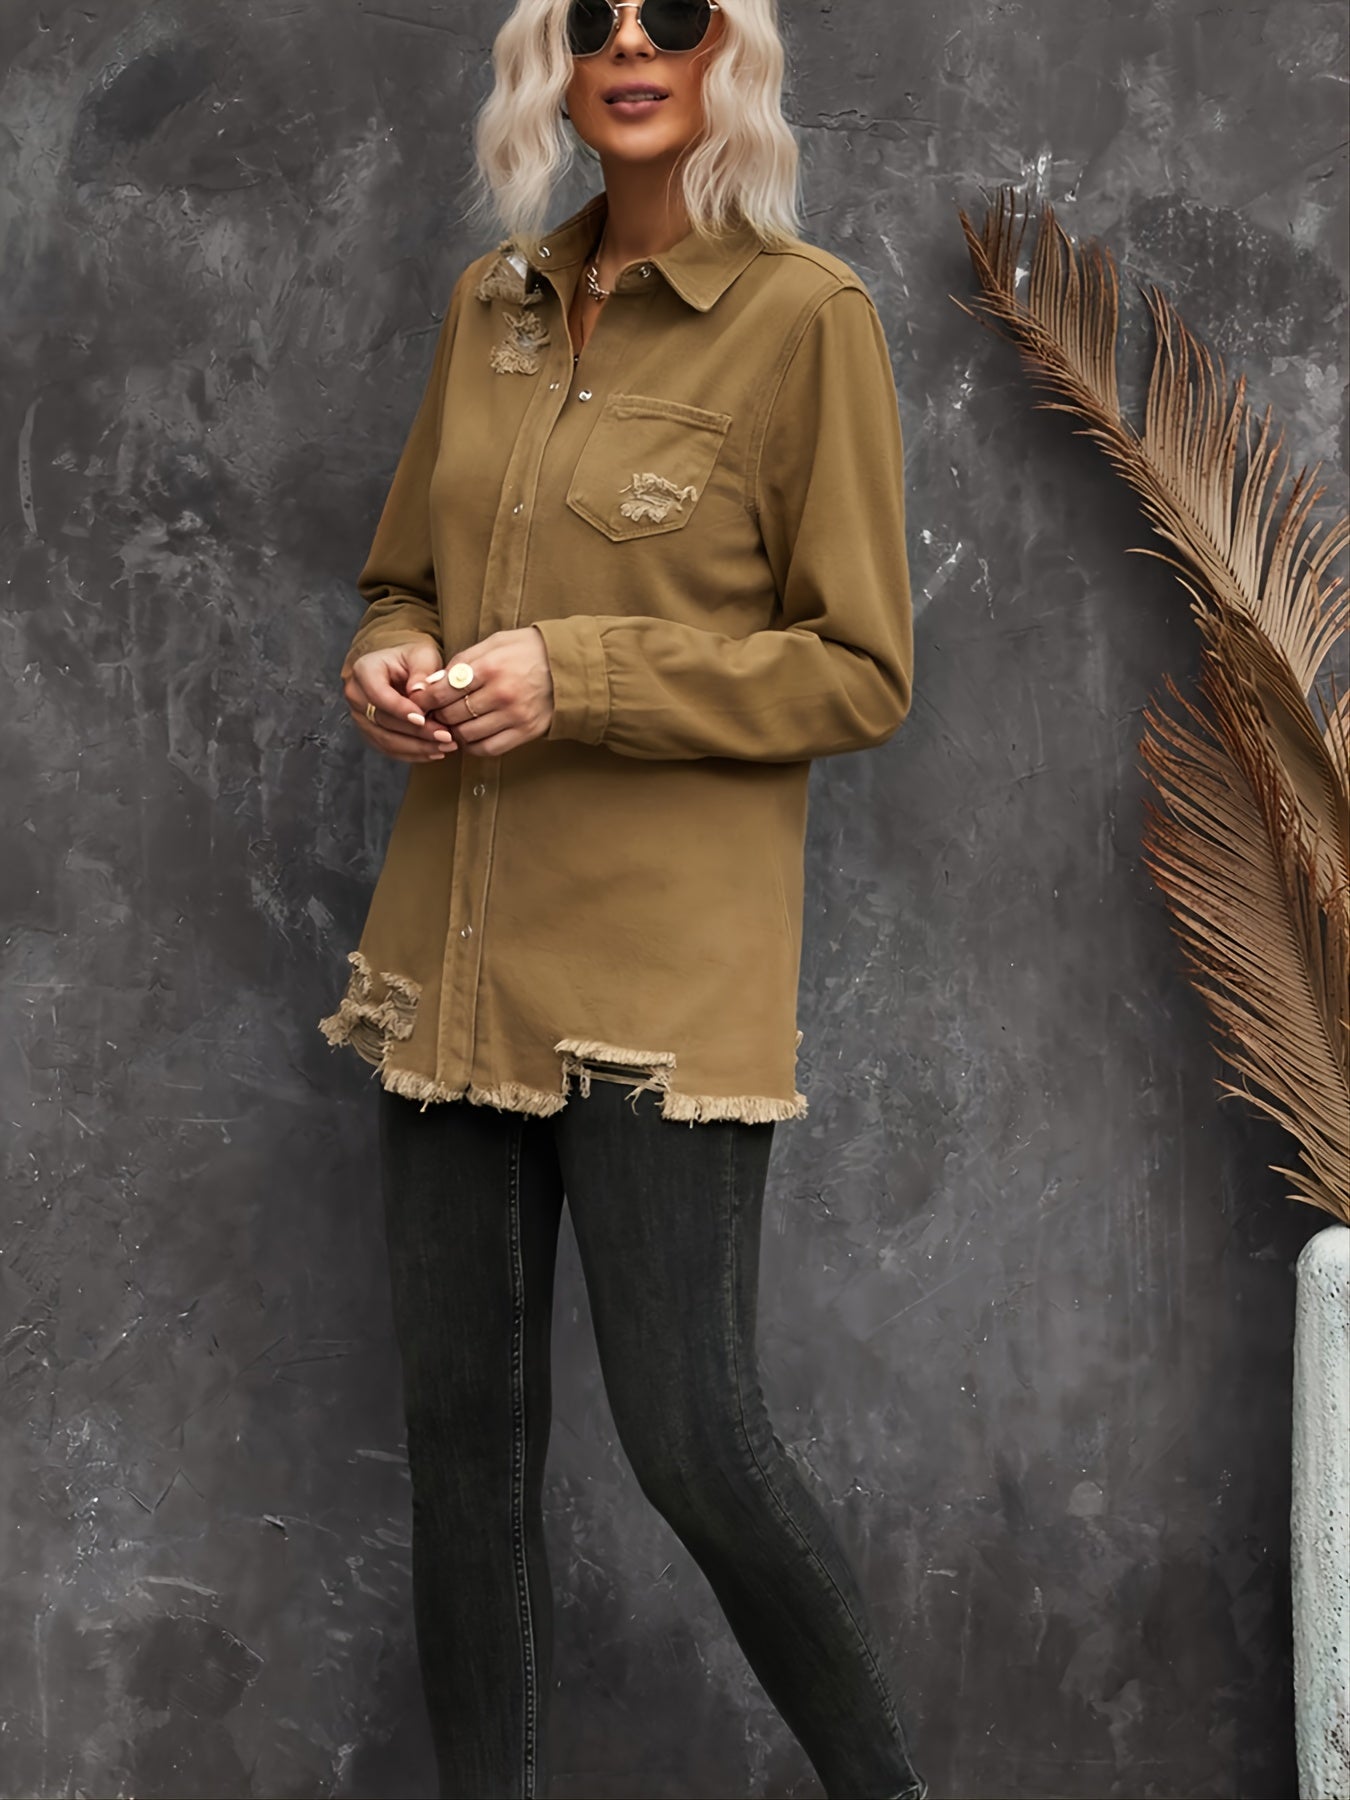 Lovevop-Solid Color Distressed Denim Thin Jacket, Raw Hem One Patch Pocket Denim Shirt Coat, Women's Denim & Clothing